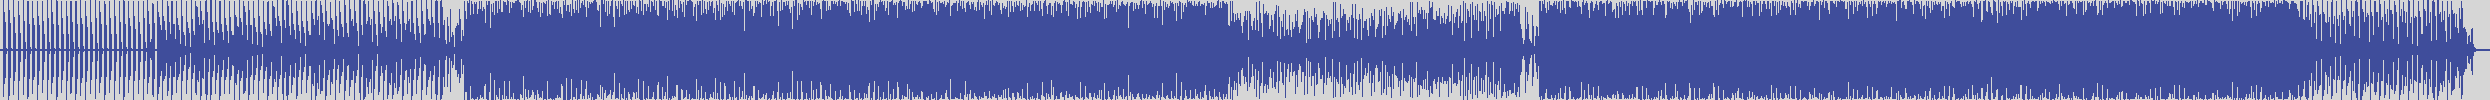 nf_boyz_records [NFY053] Ubaldo Ronald - Time to Tech [Extended] audio wave form